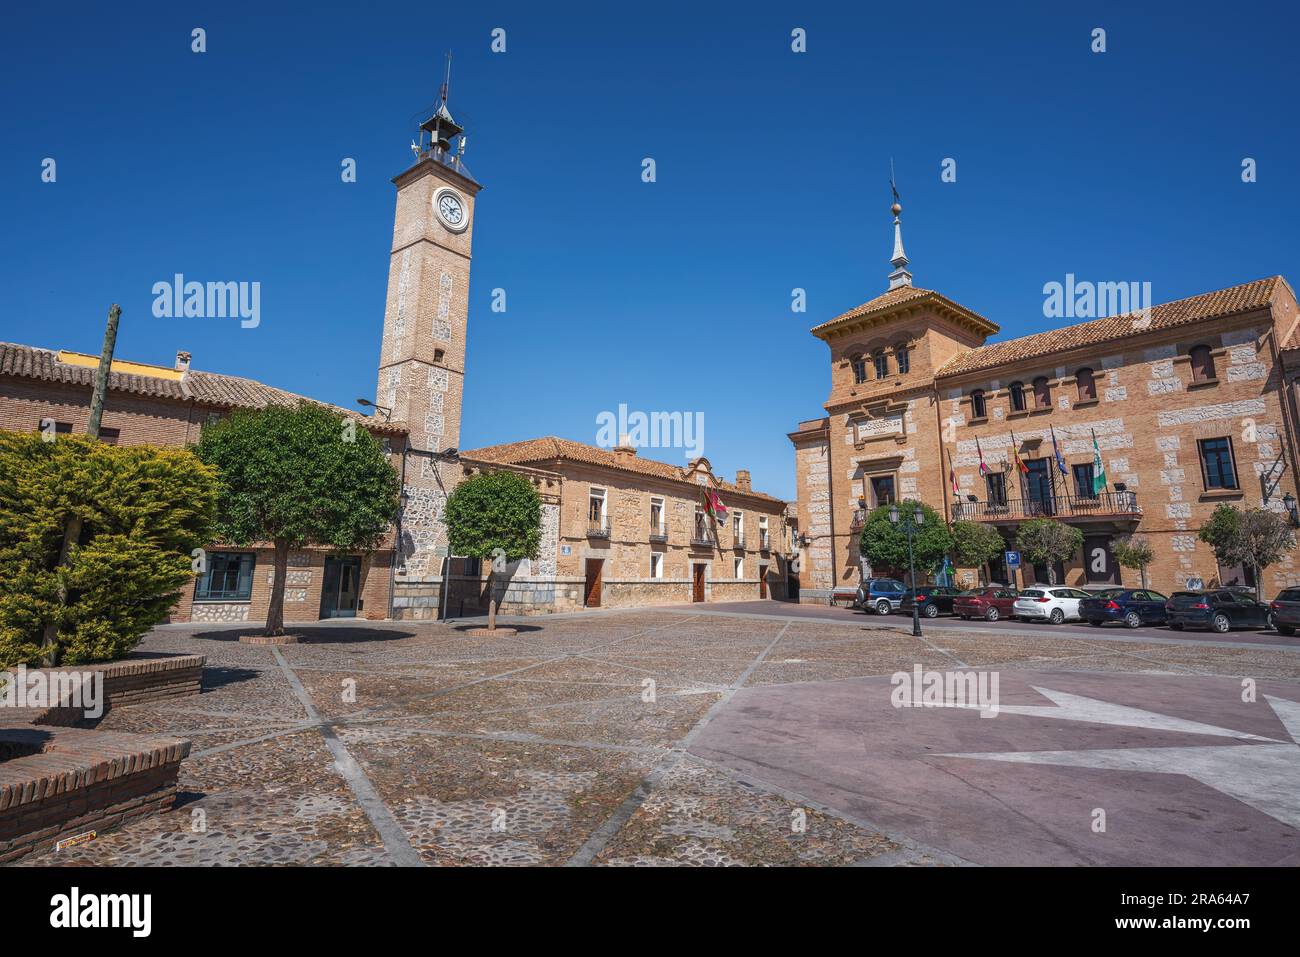 Plaza de Espana Square with Clock Tower (Torre del Reloj) and Consuegra City Hall - Consuegra, Castilla-La Mancha, Spain Stock Photo